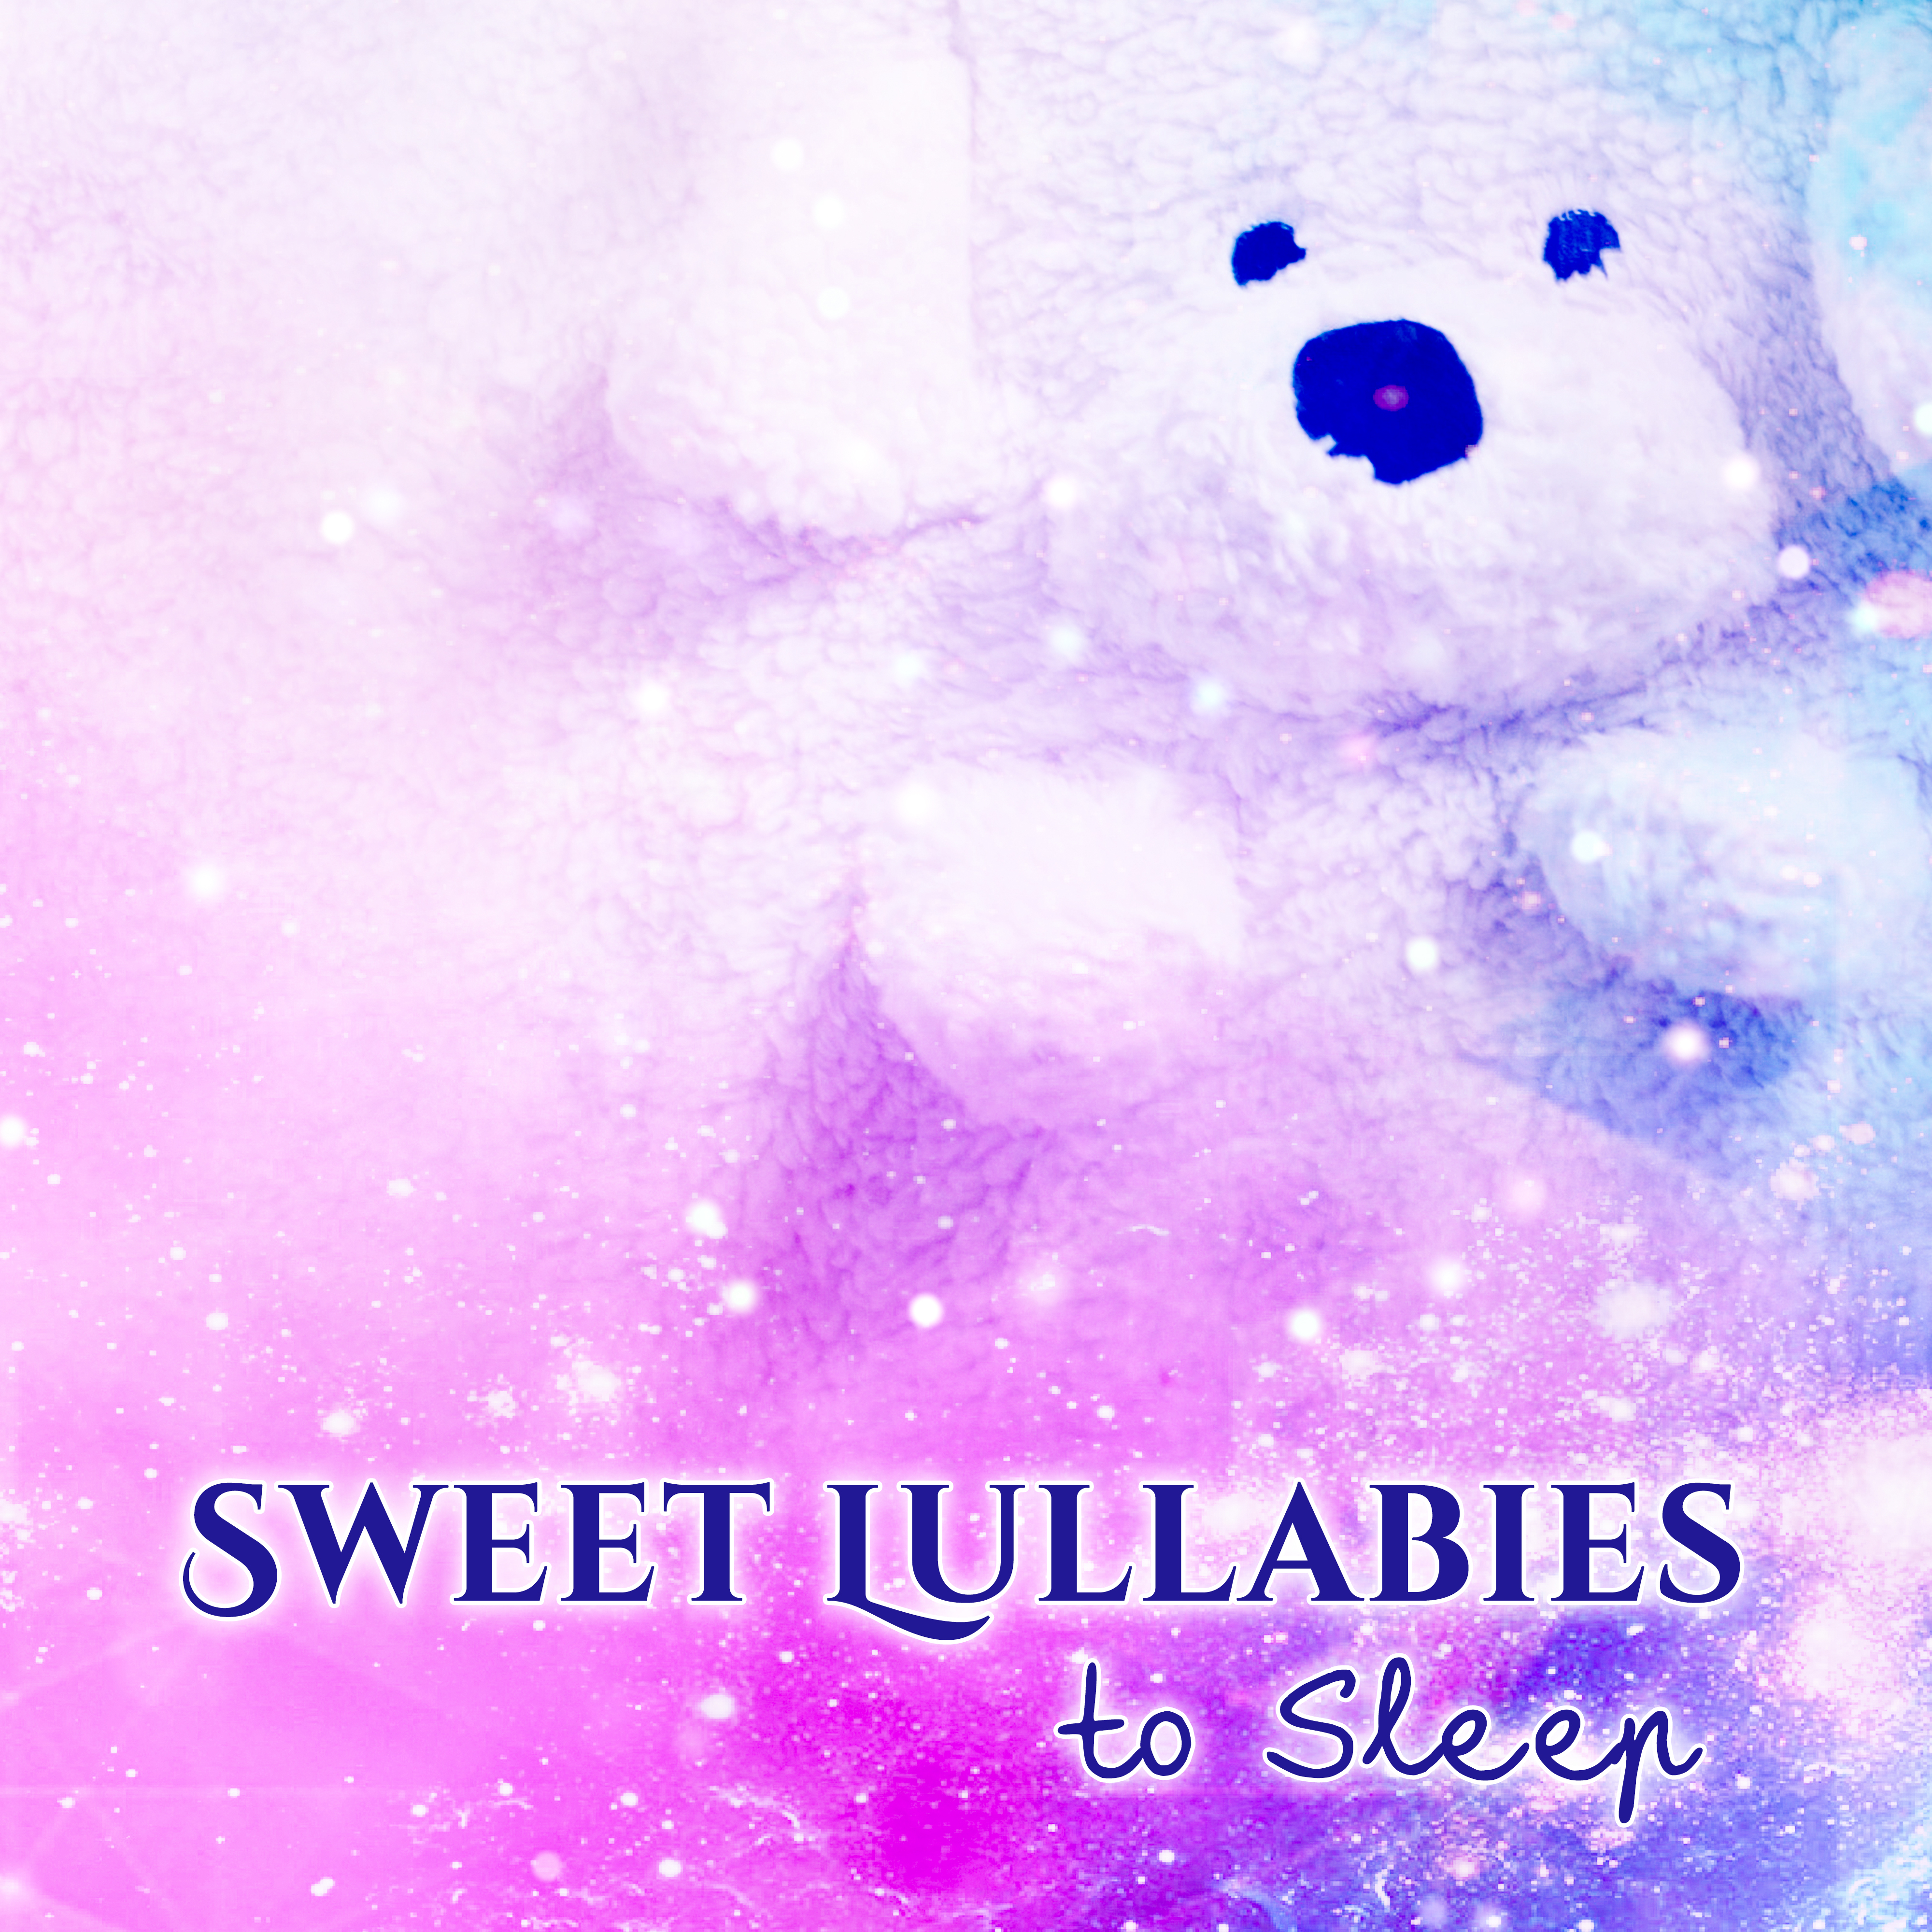 Sweet Lullabies to Sleep